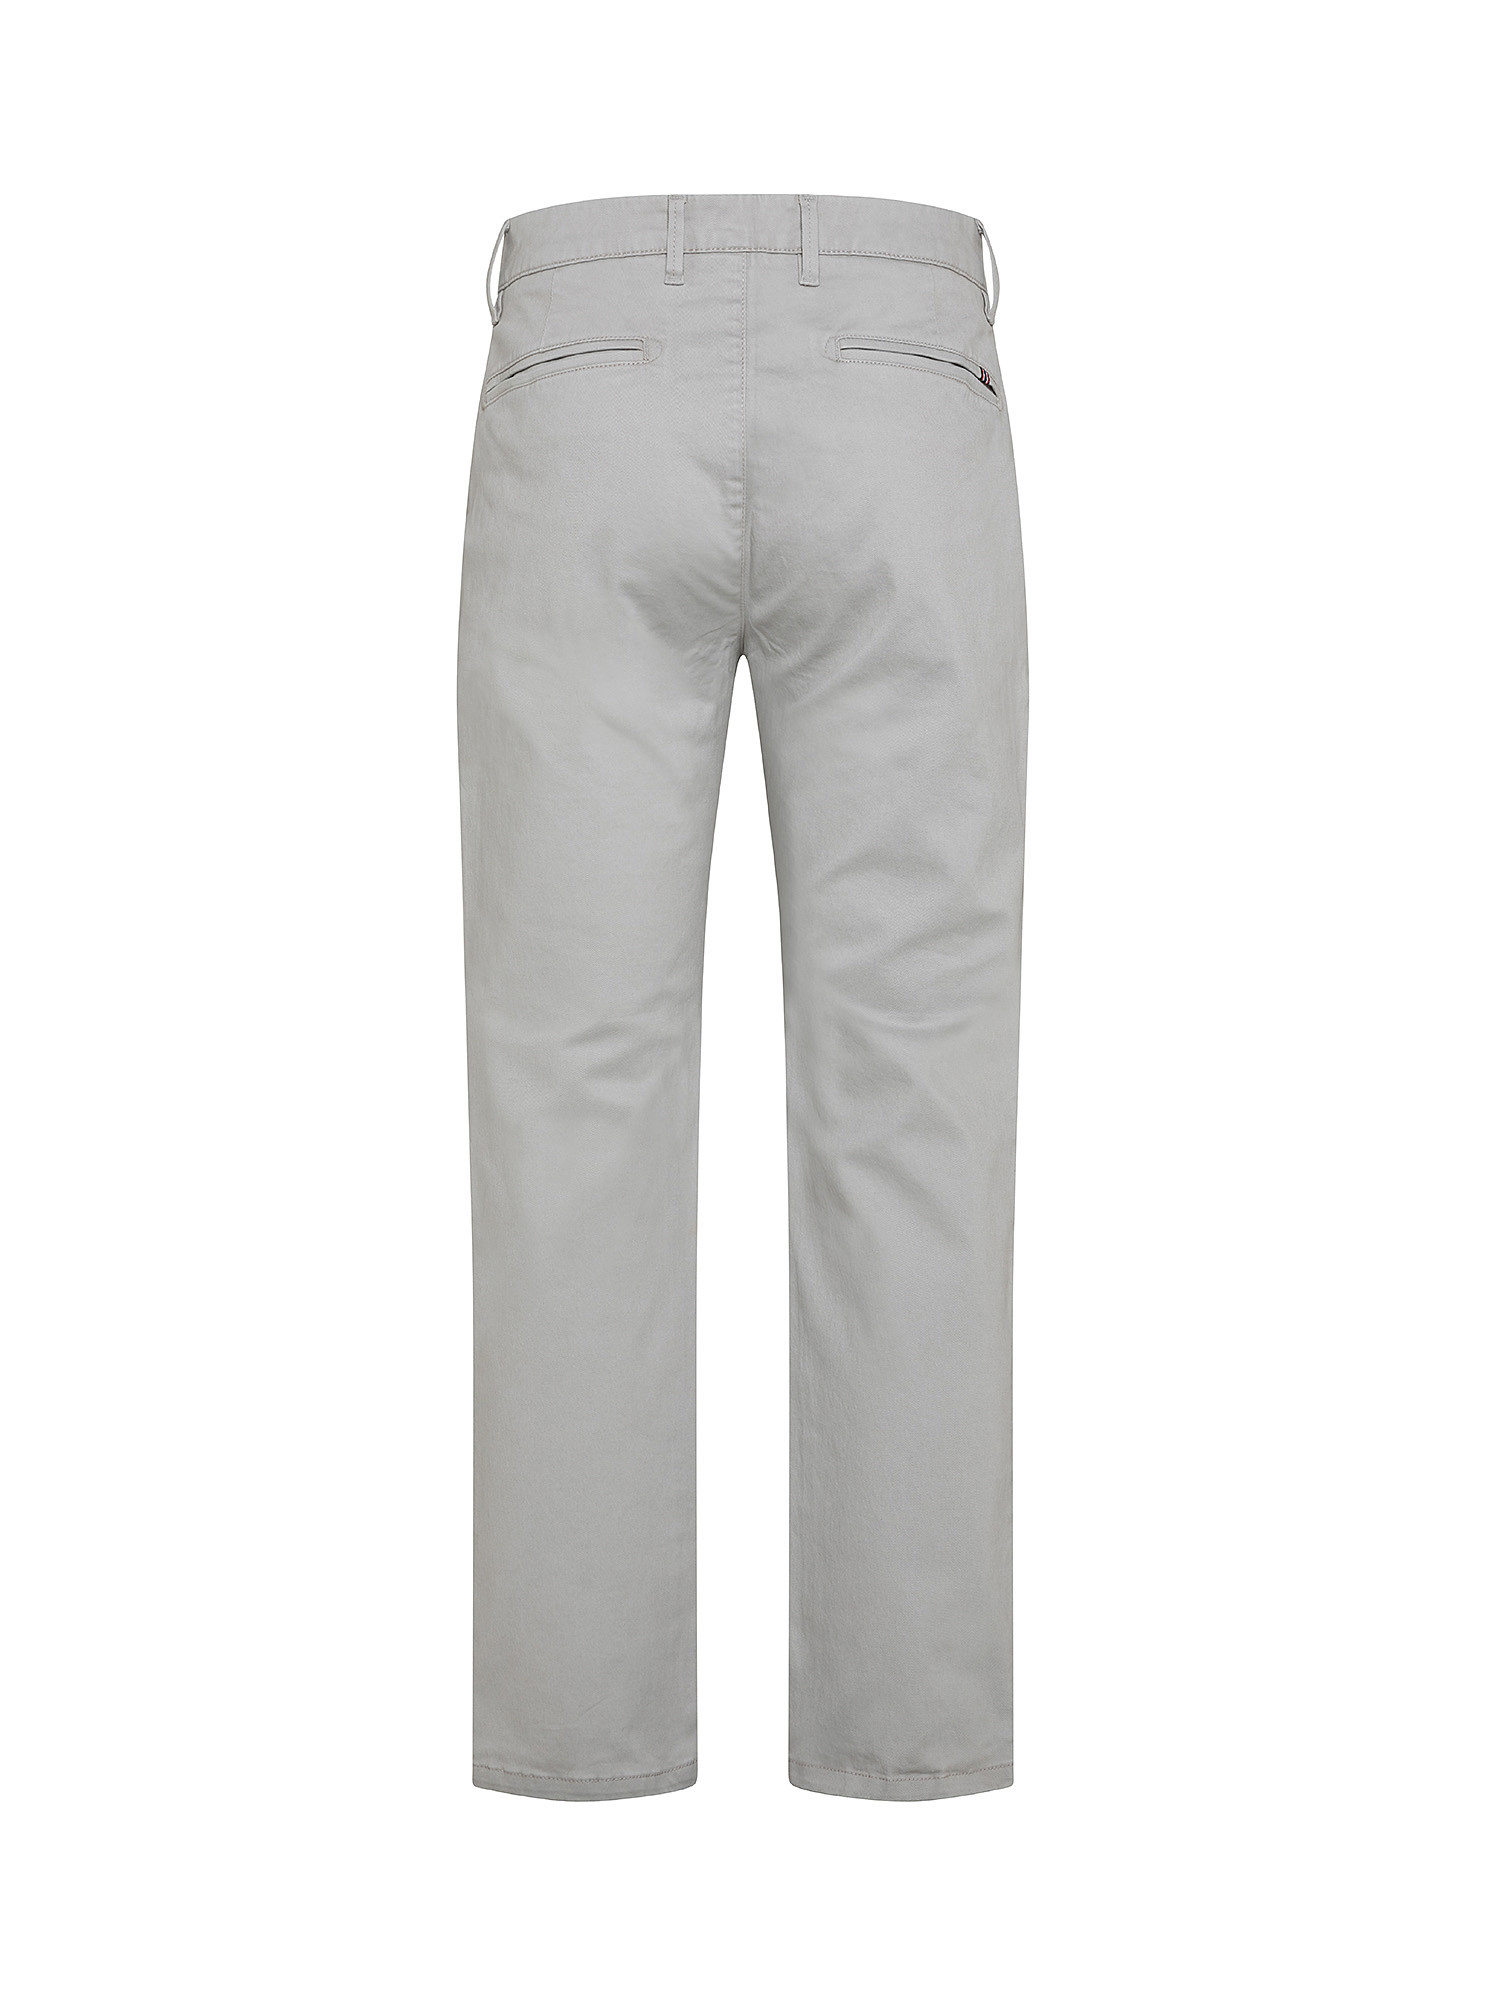 Pantalone chinos in cotone stretch, Grigio perla, large image number 1